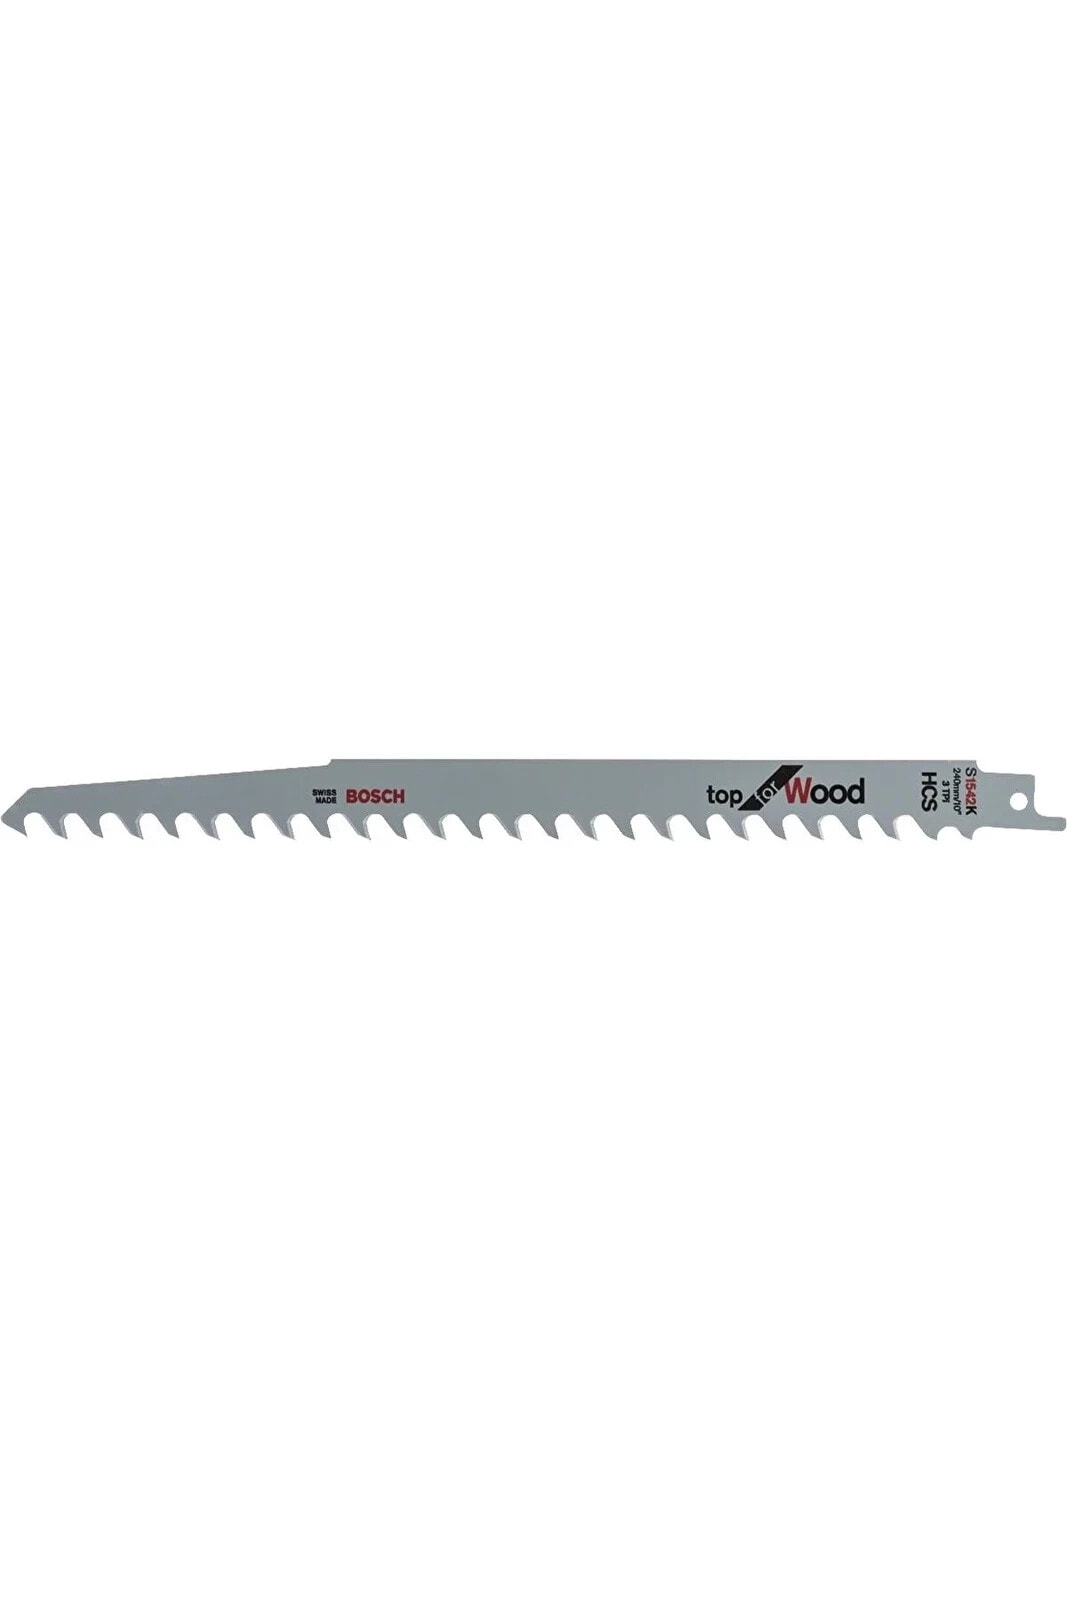 S 1542 K Top For Wood 2'li Testere Bıçağı - 2608650681